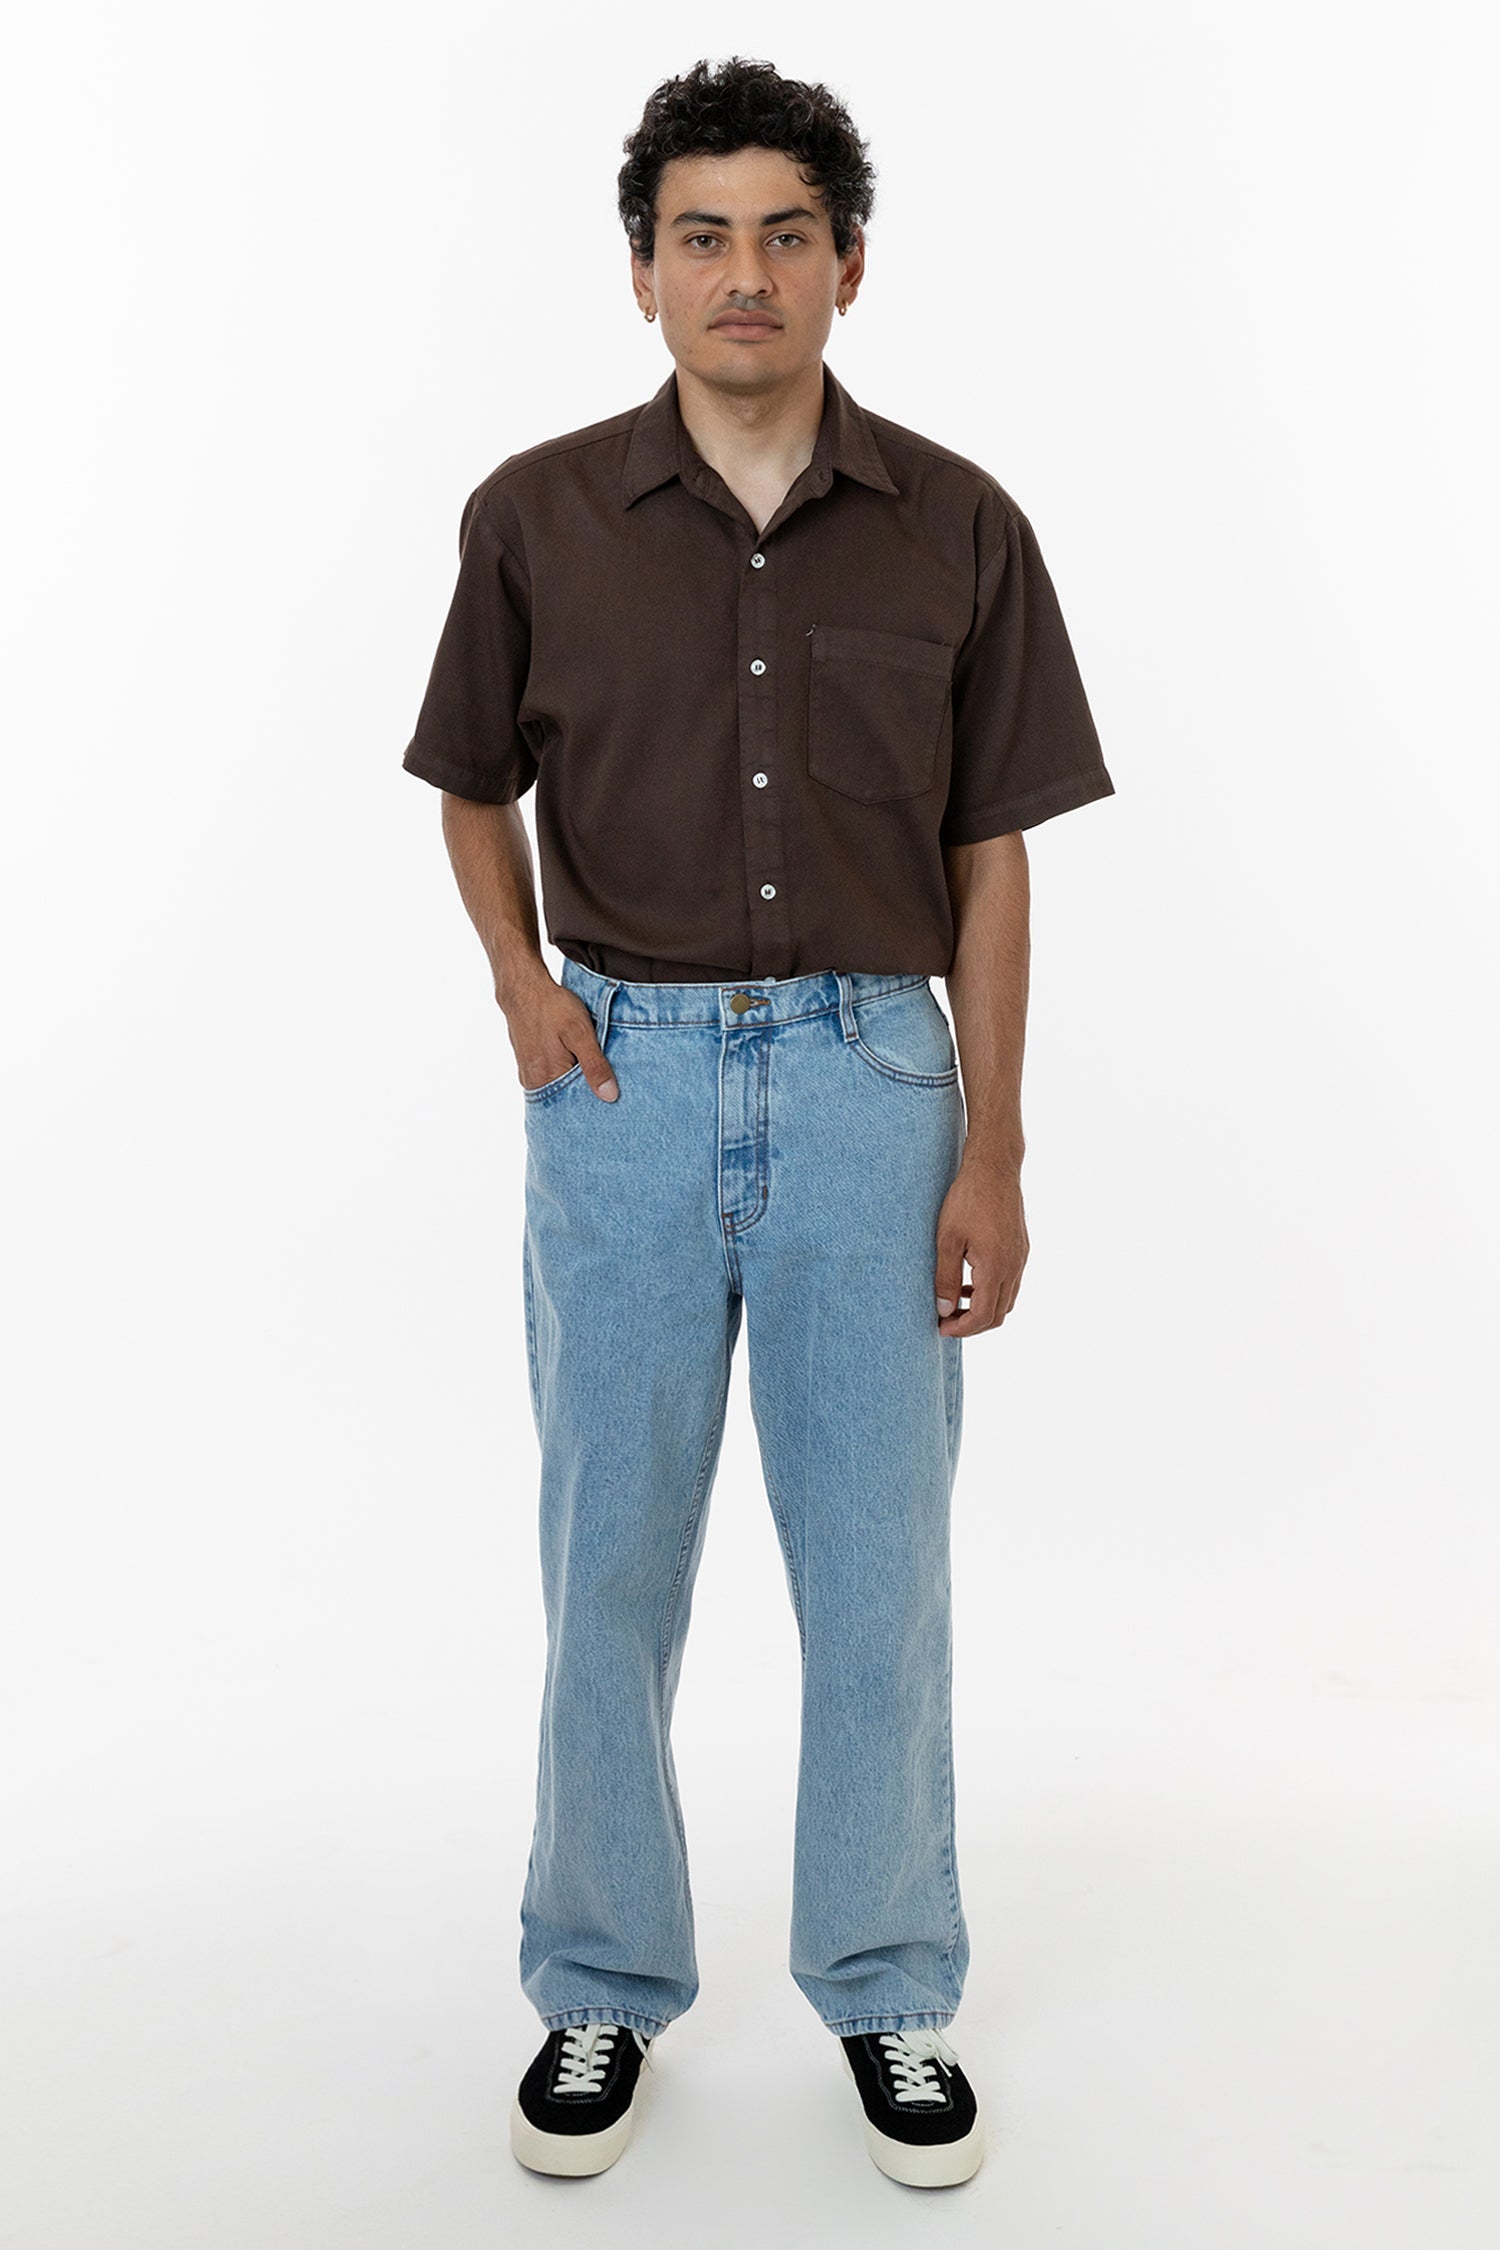 Men's Medium Wash Athletic Skinny Jeans, Men's Bottoms